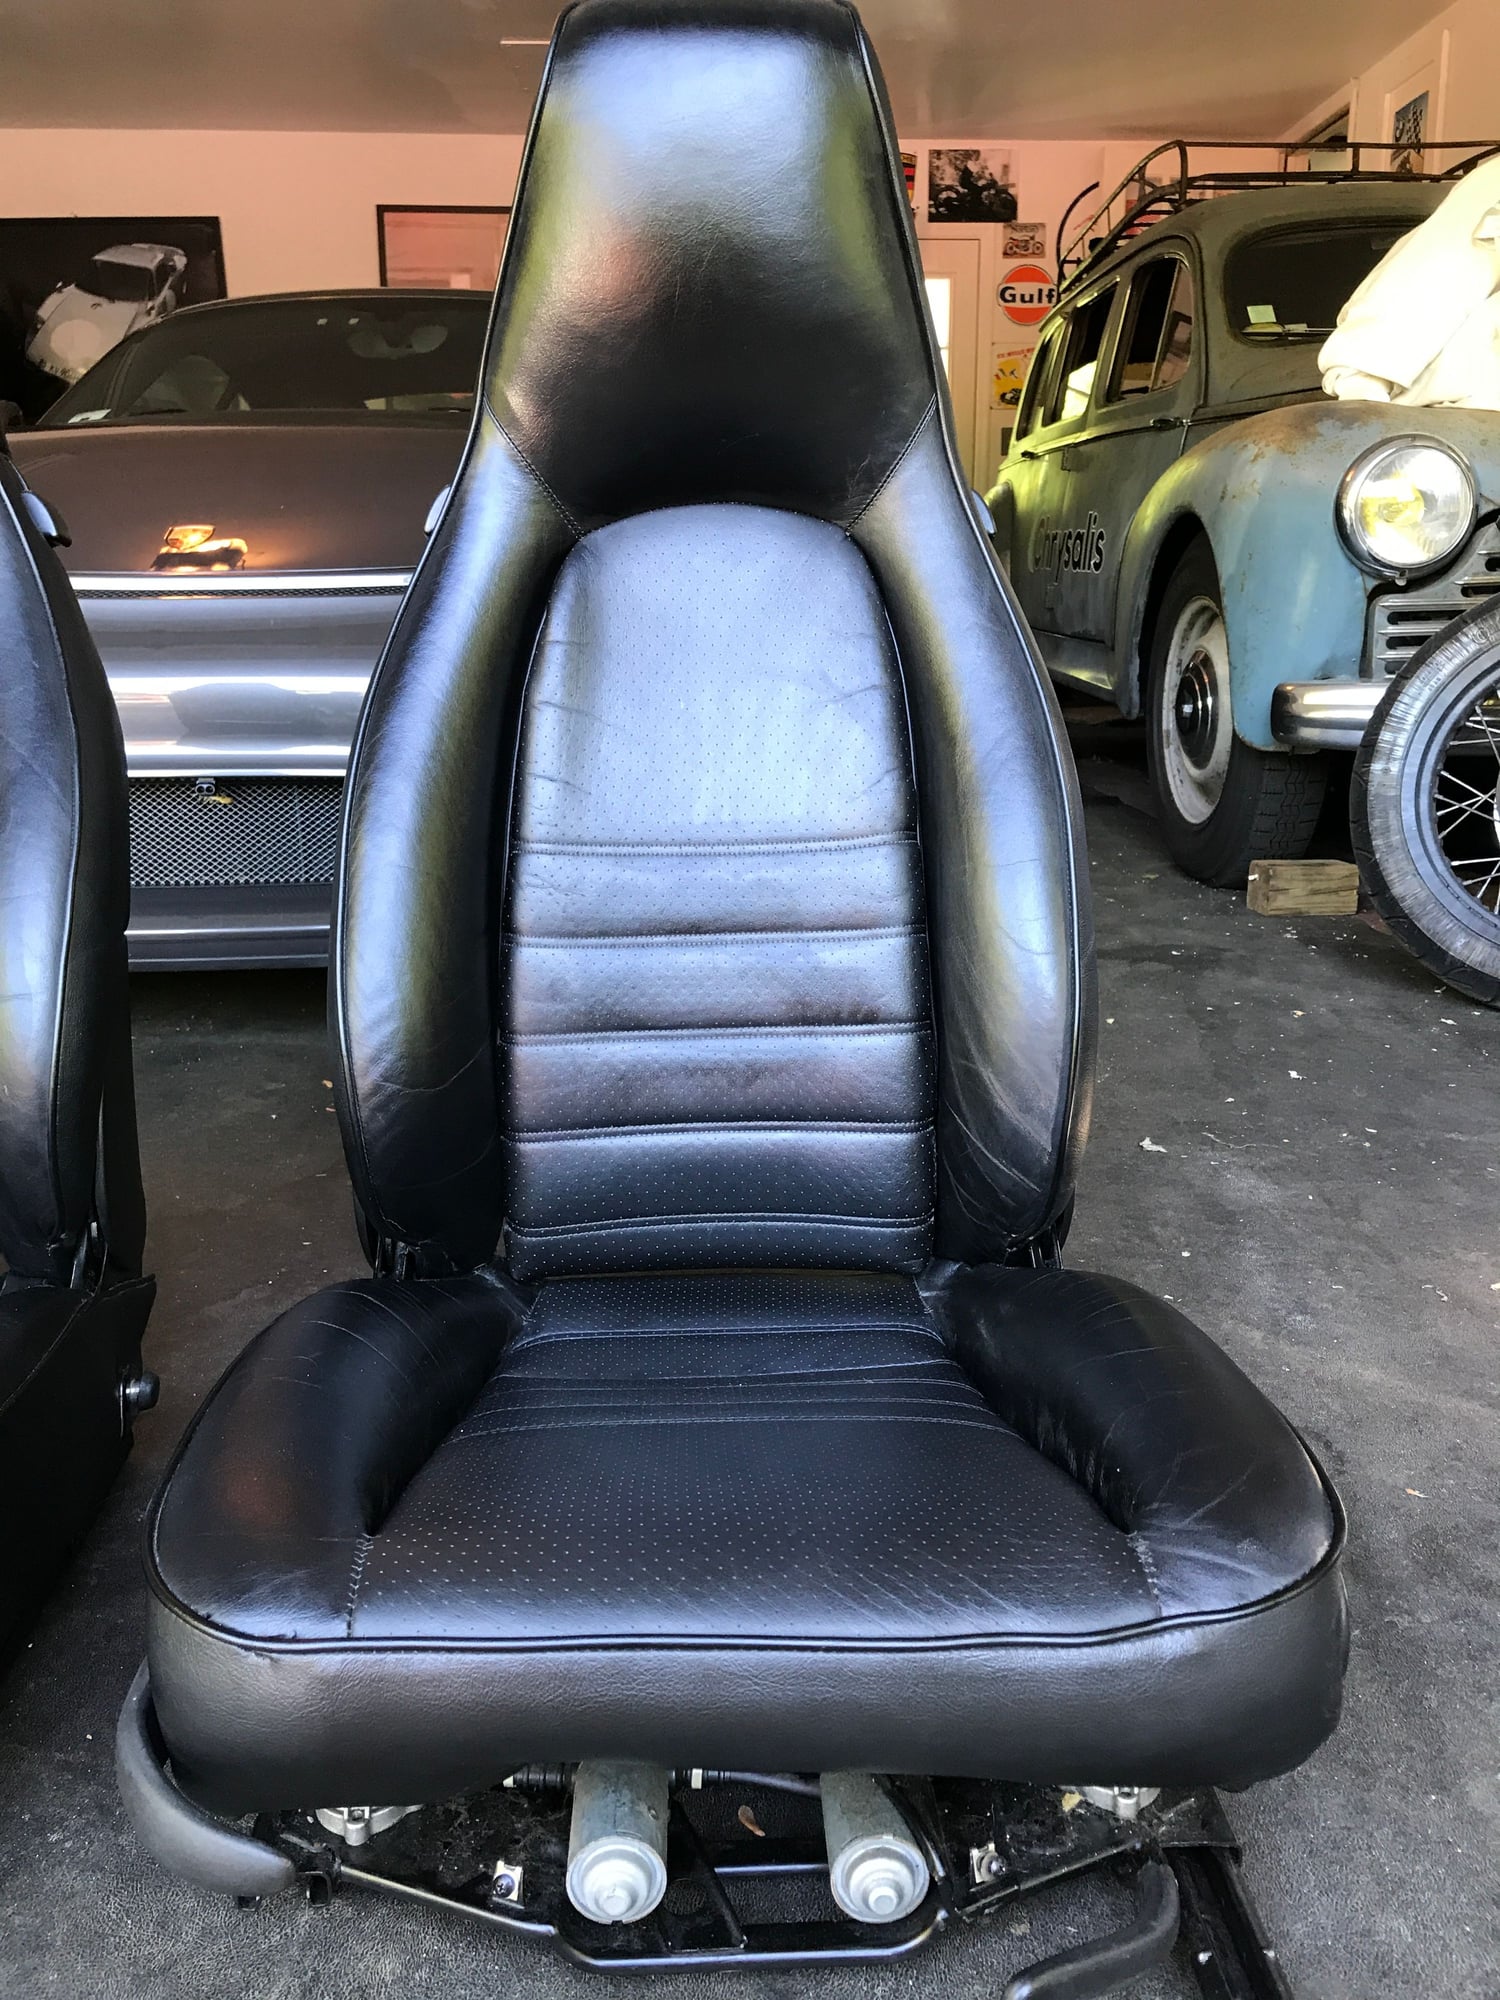 Interior/Upholstery - 911/968/944 Black Leather Seats, Original Amazing Condition - Used - 1981 to 1994 Porsche 911 - 1981 to 1991 Porsche 944 - 1992 to 1995 Porsche 968 - Mountainside, NJ 07092, United States